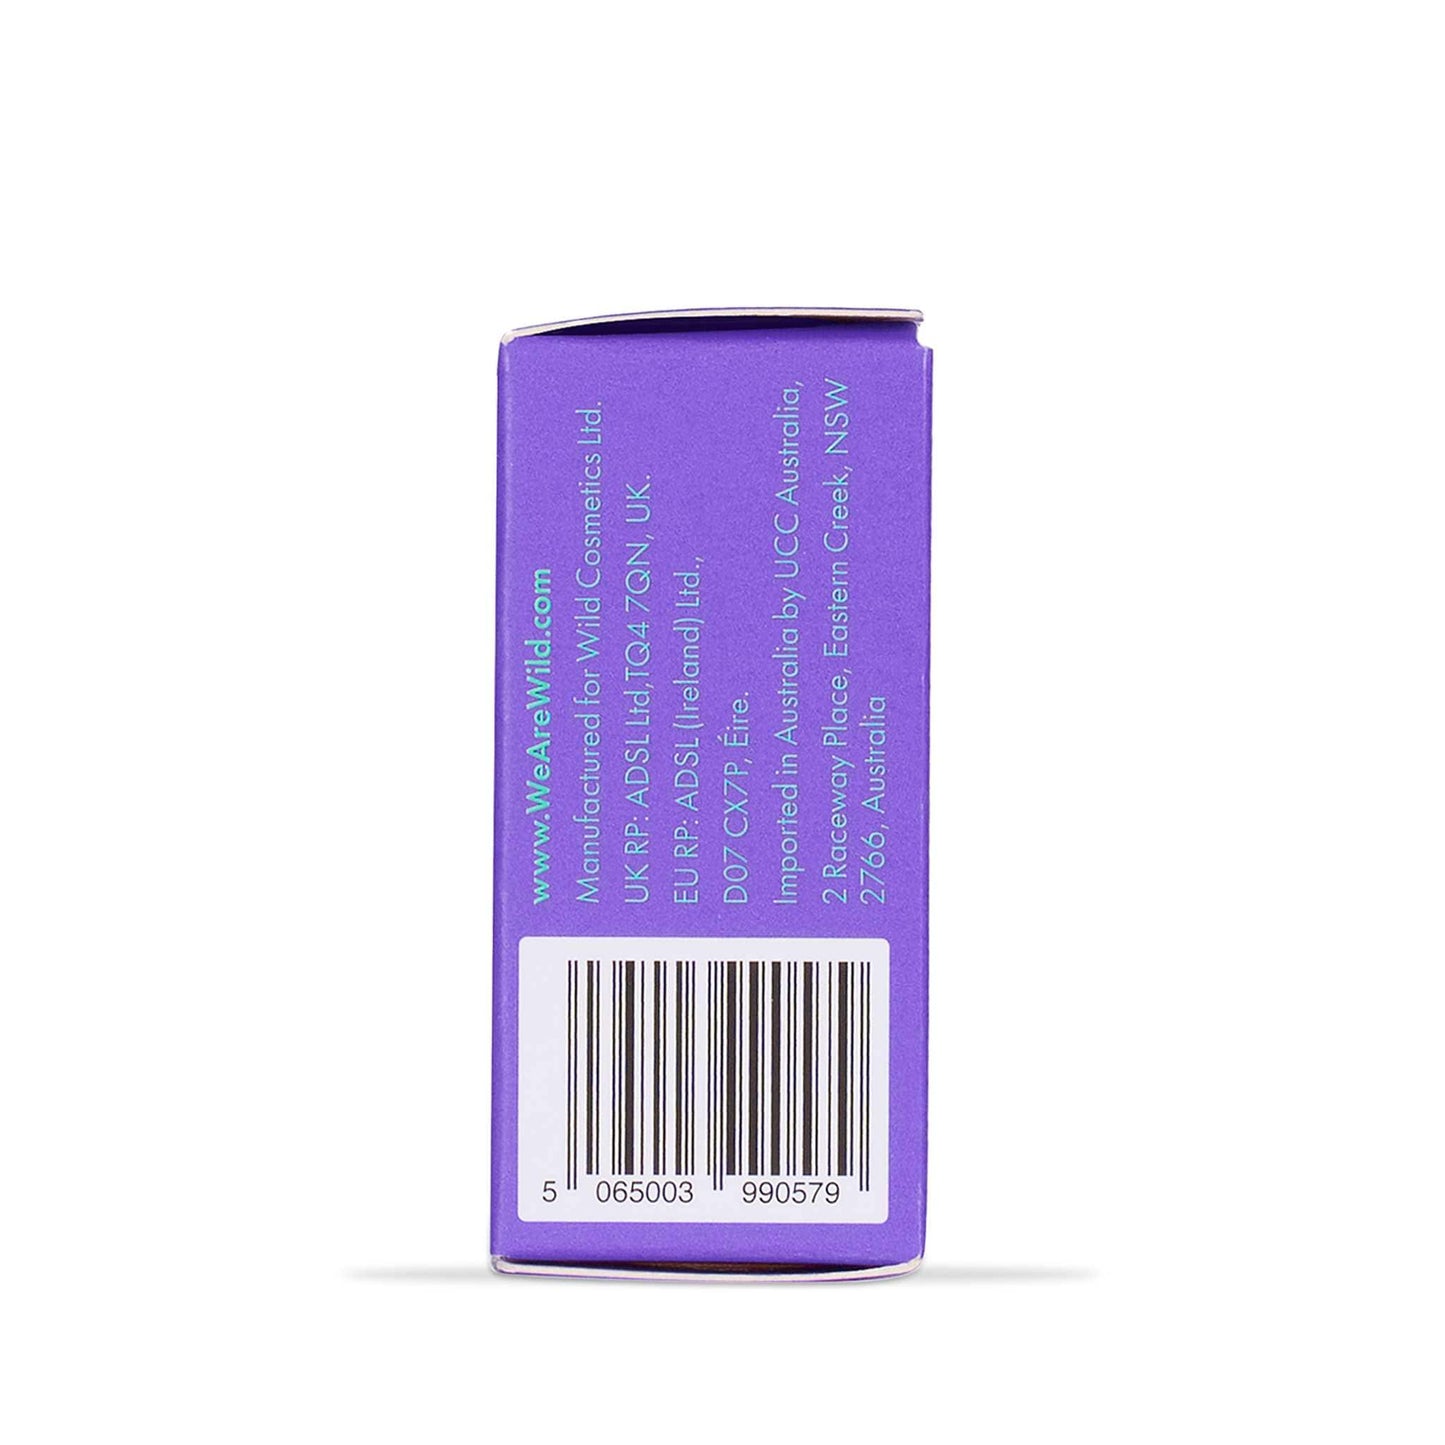 Load image into Gallery viewer, Wild Deodorant Wild Coconut &amp;amp; Vanilla Natural Deodorant Refill 43g
